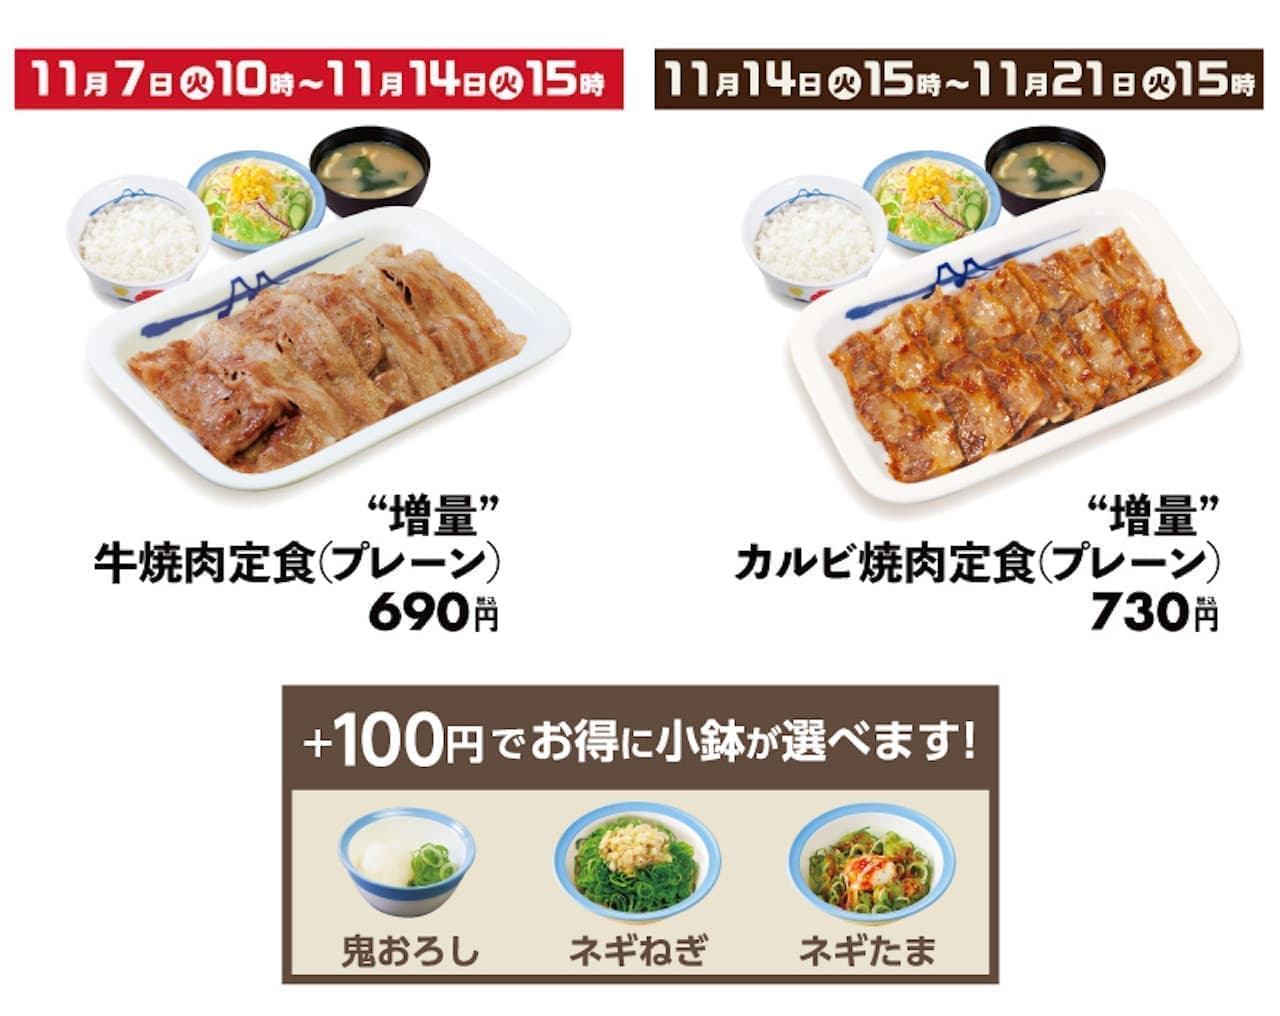 Matsuya Beef Yakiniku and Karubi Yakiniku Set Meal Increase Fair